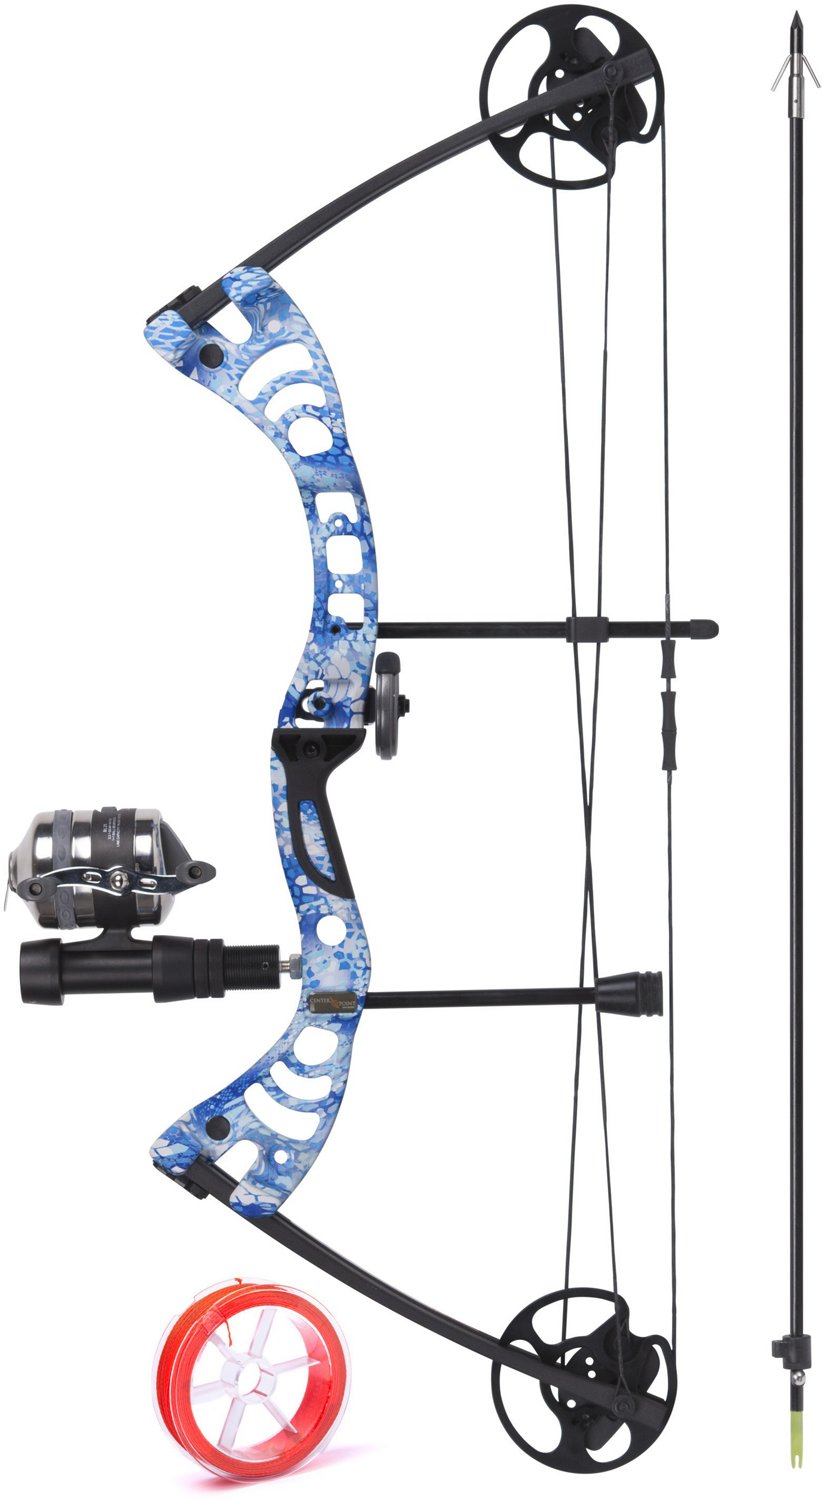  LDNUSSGEX 40lbs Bow Fishing Combo Kit Archery